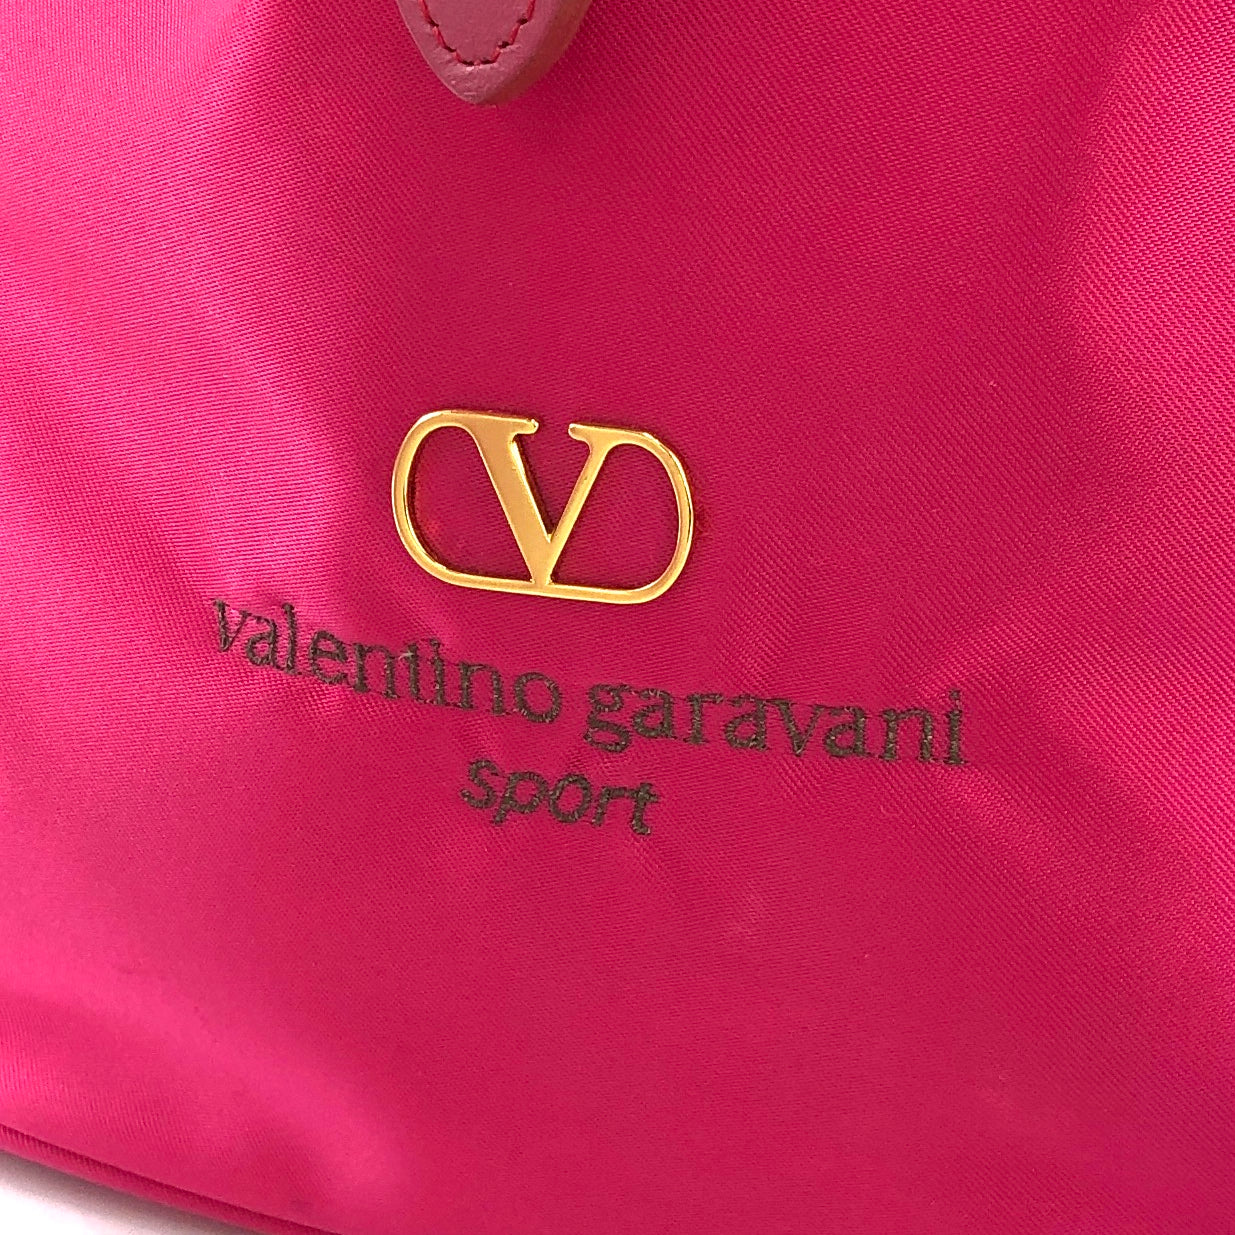 VALENTINO GARAVANI Nylon Backpack Pink Vintage Old 3kiw2c